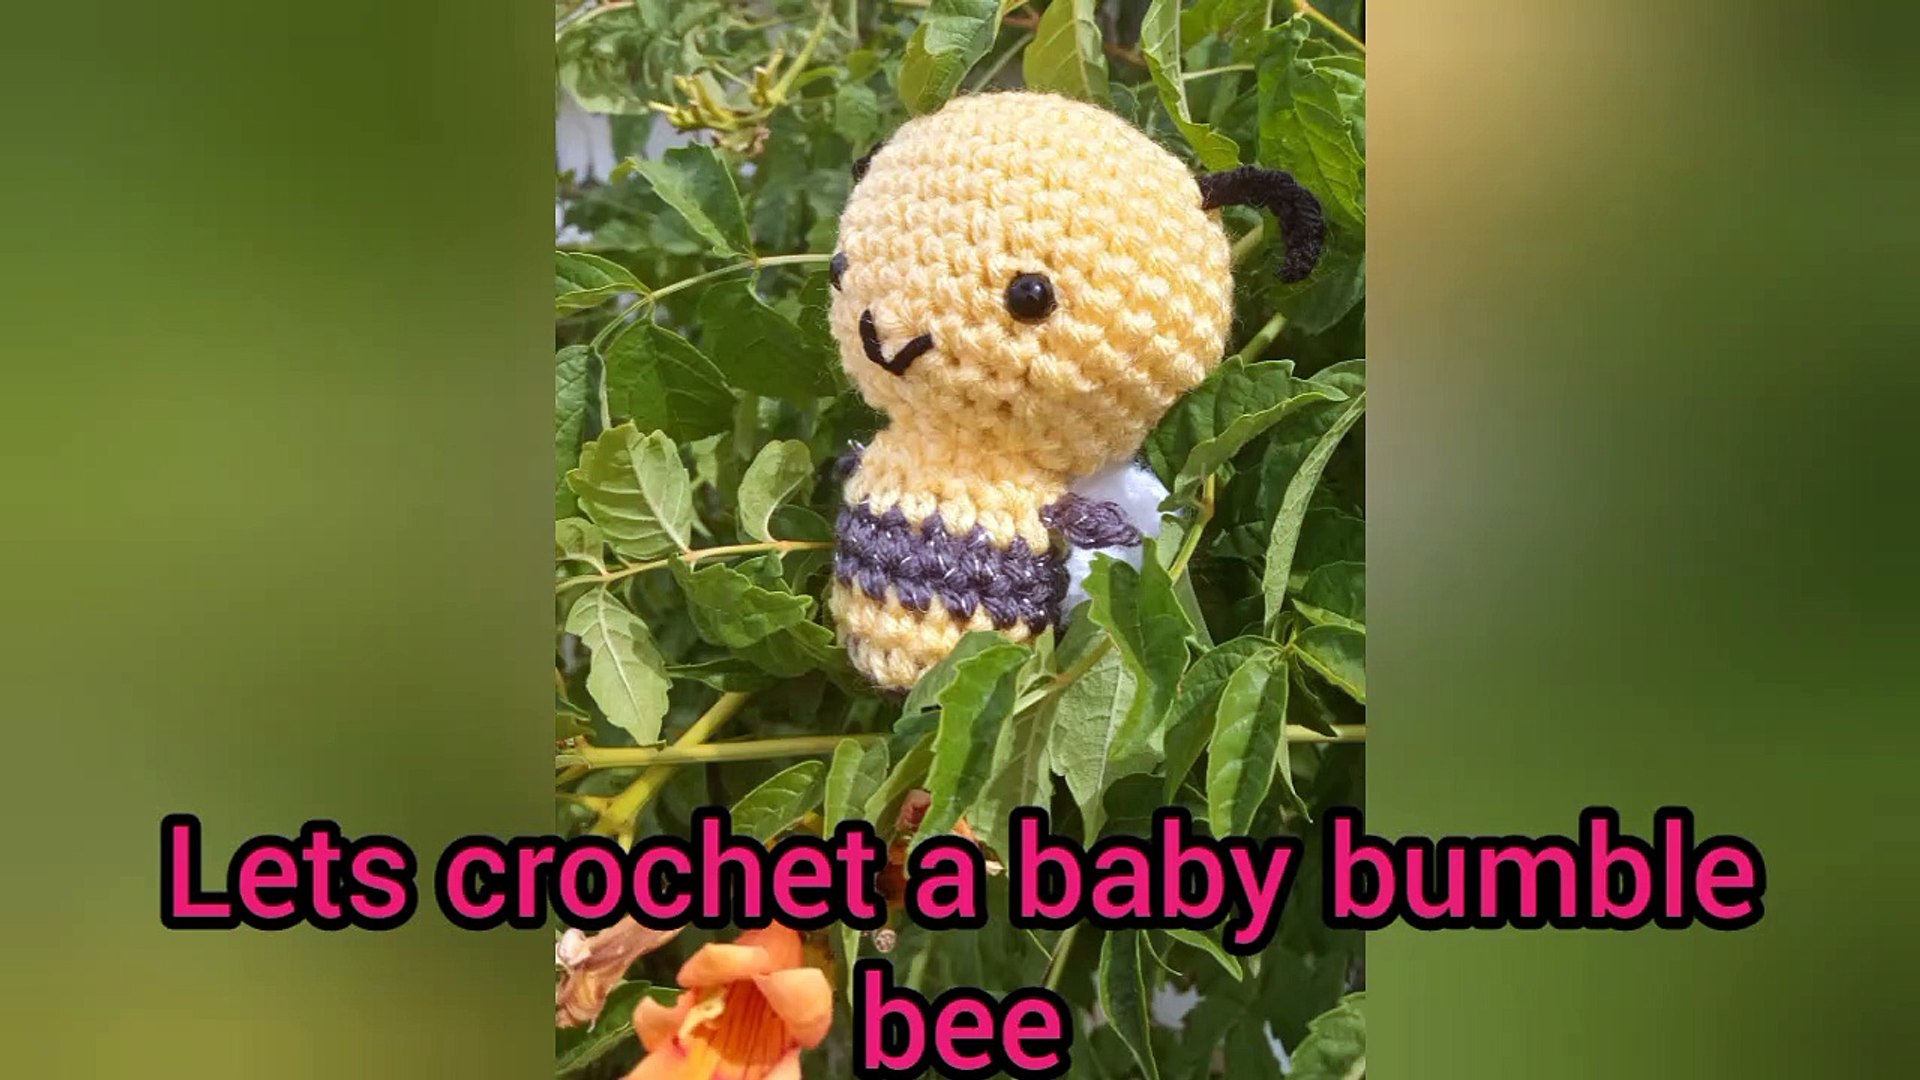 ☮Crochet A Baby Bumble Bee, How To Crochet An Amigurumi Baby Bumble Bee Written Pattern In Post